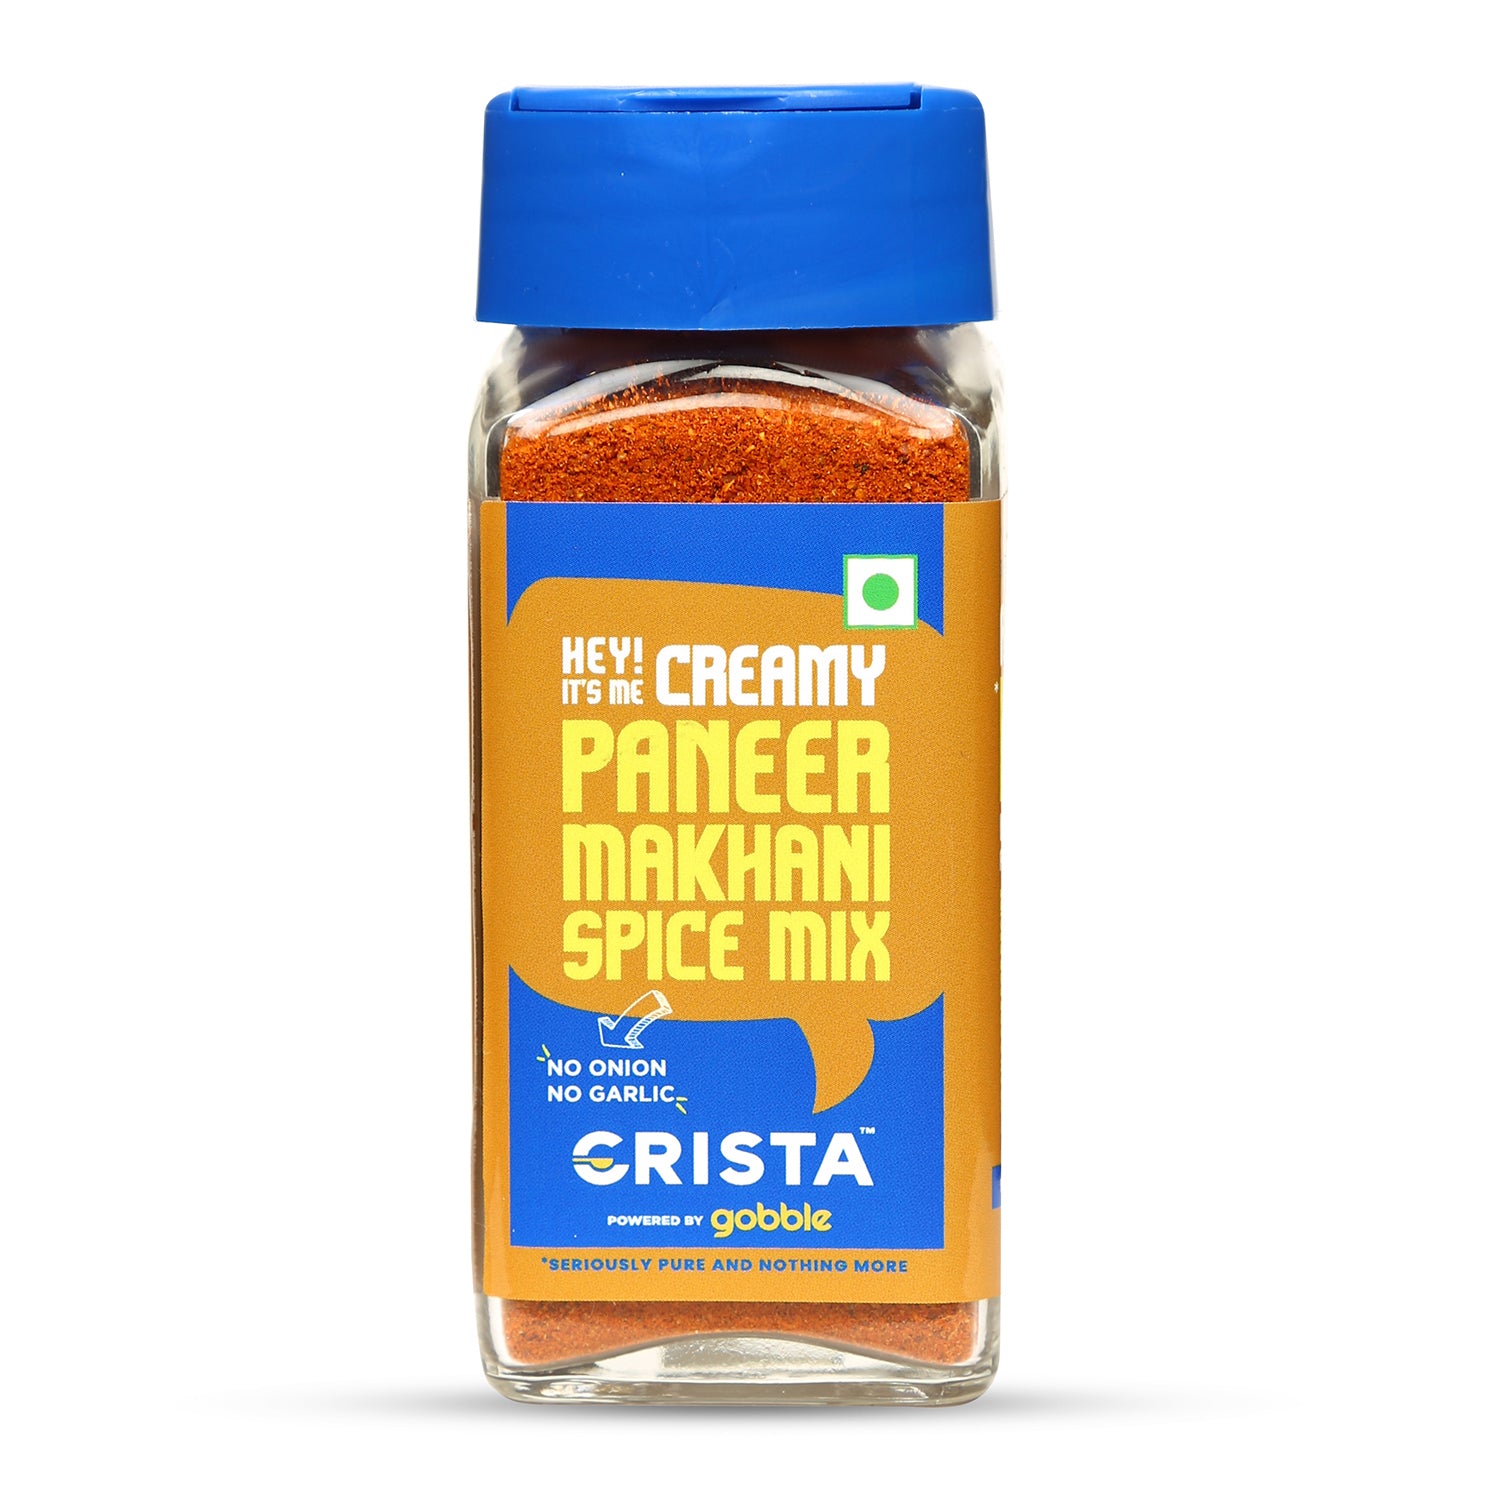 CRISTA Creamy Paneer Makhani Spice Mix